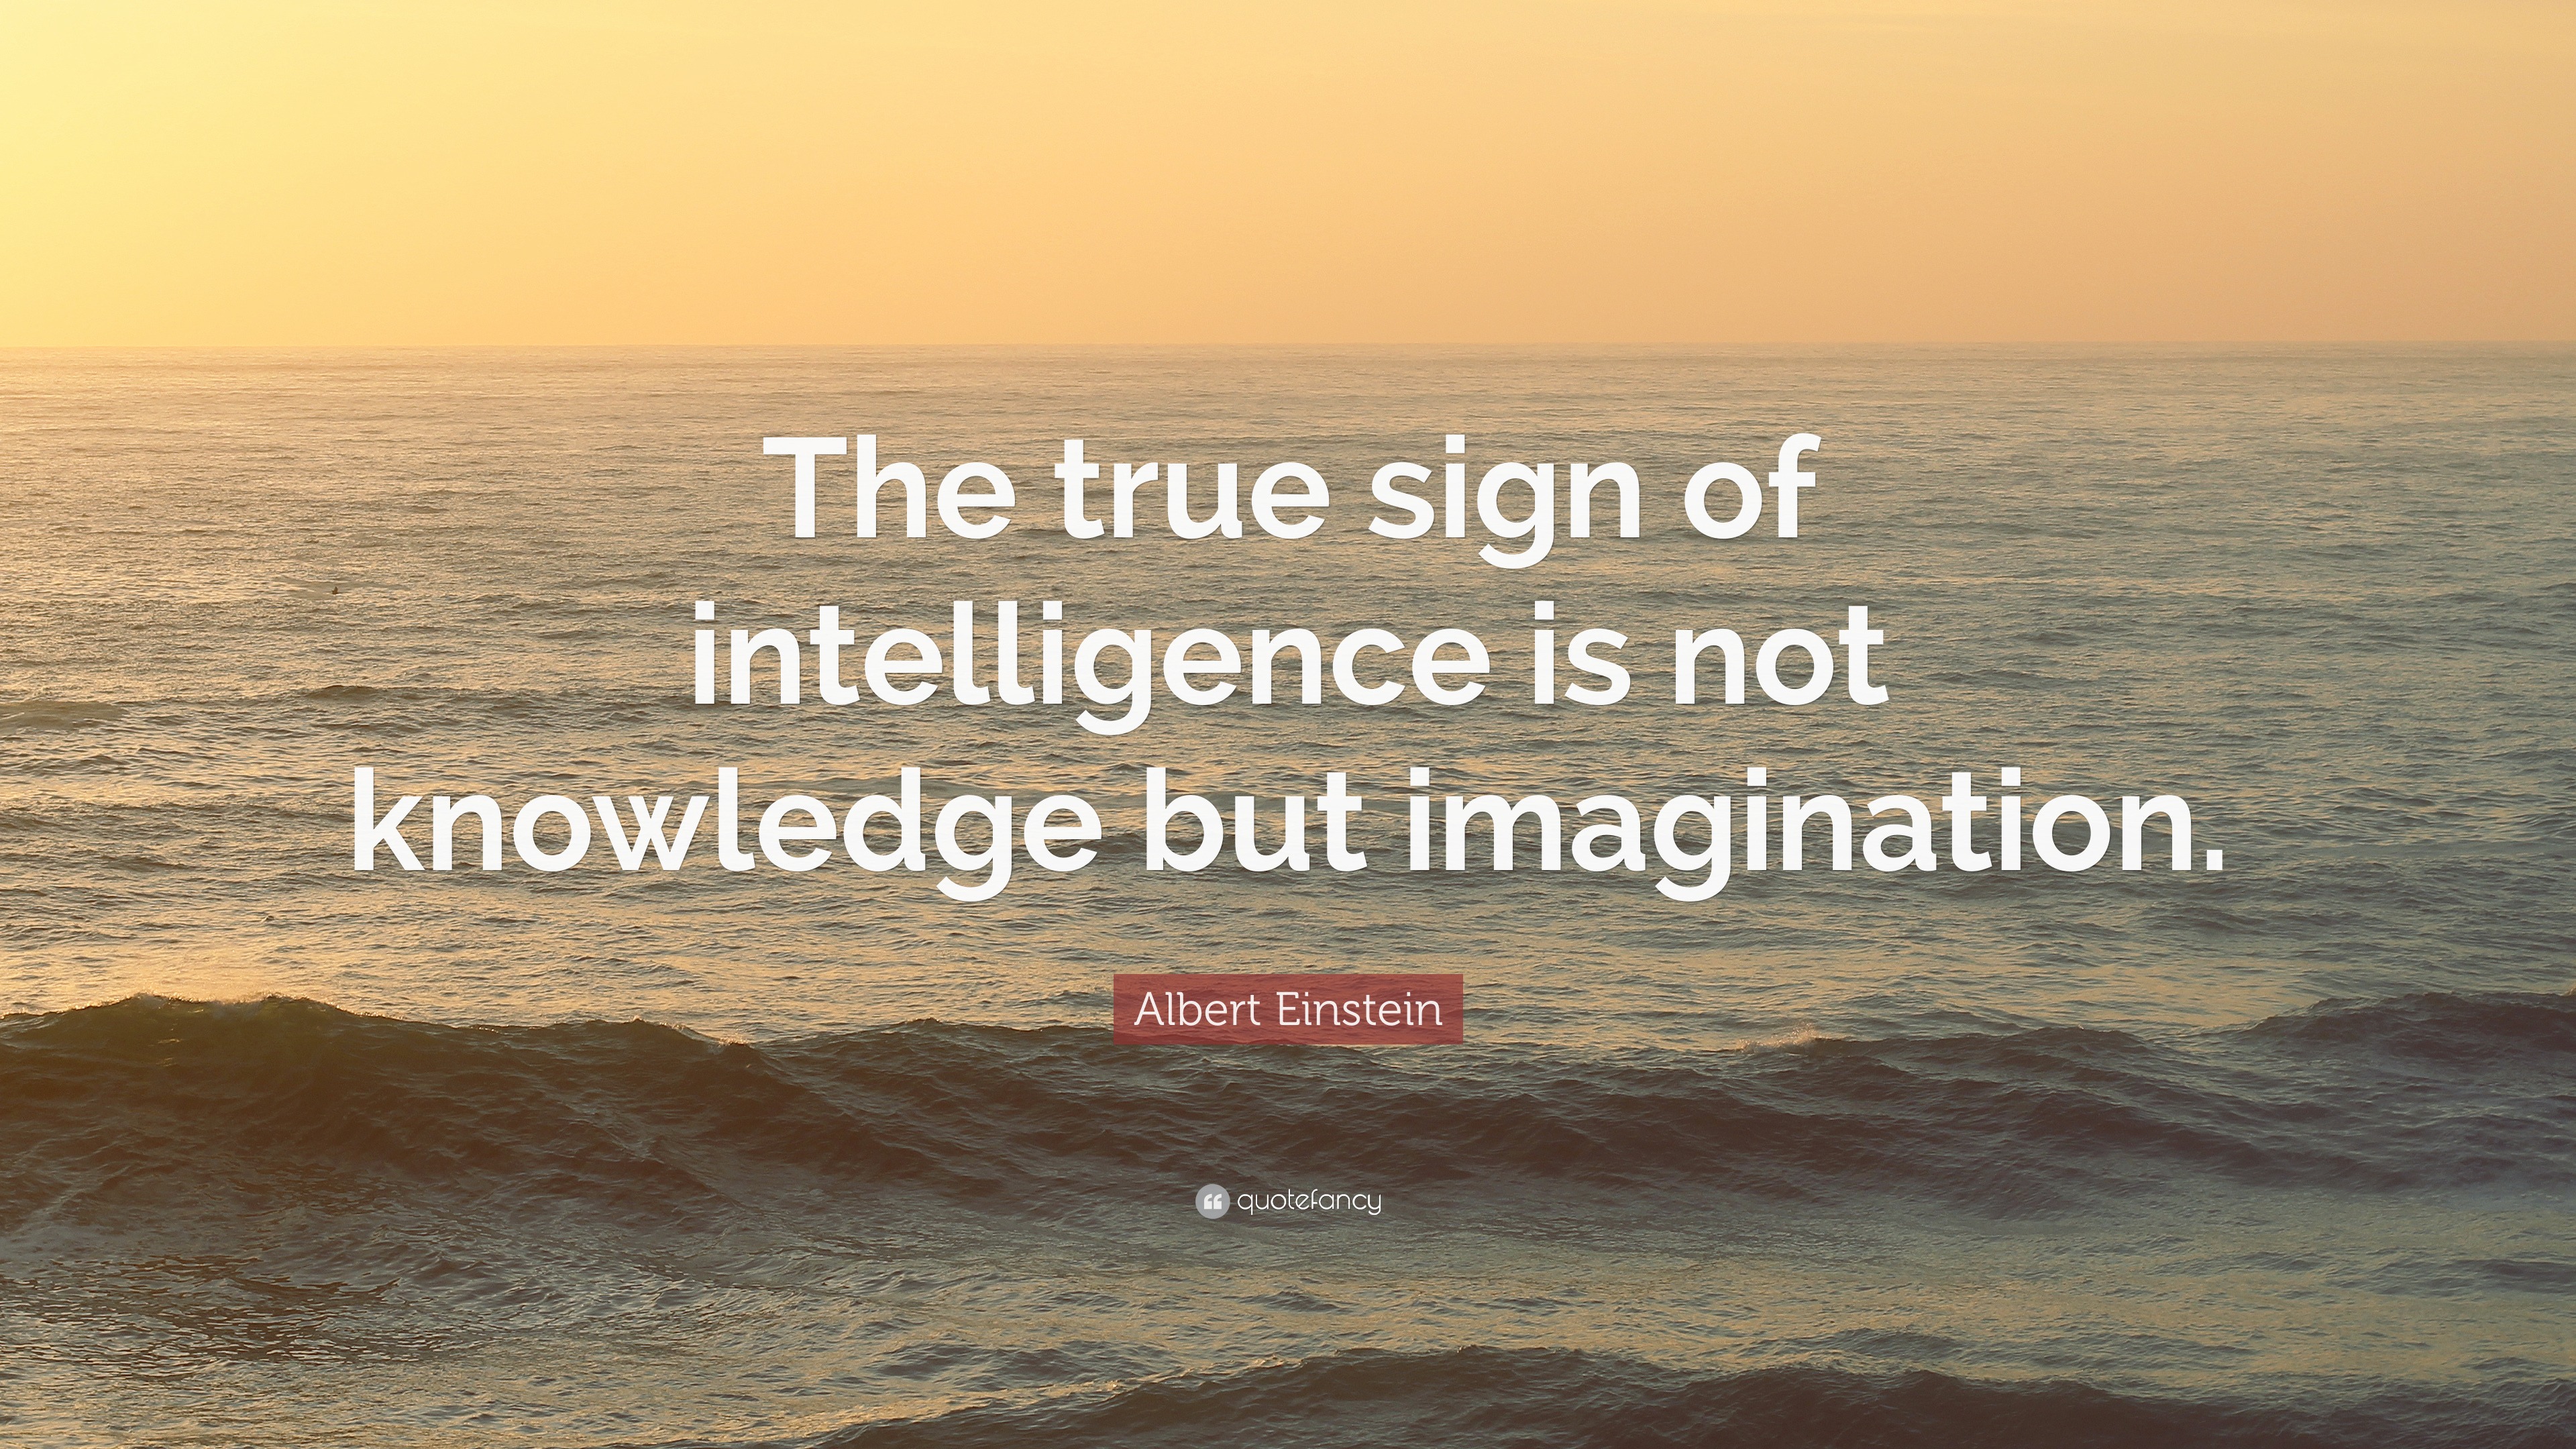 Albert Einstein Quote: “The true sign of intelligence is not knowledge